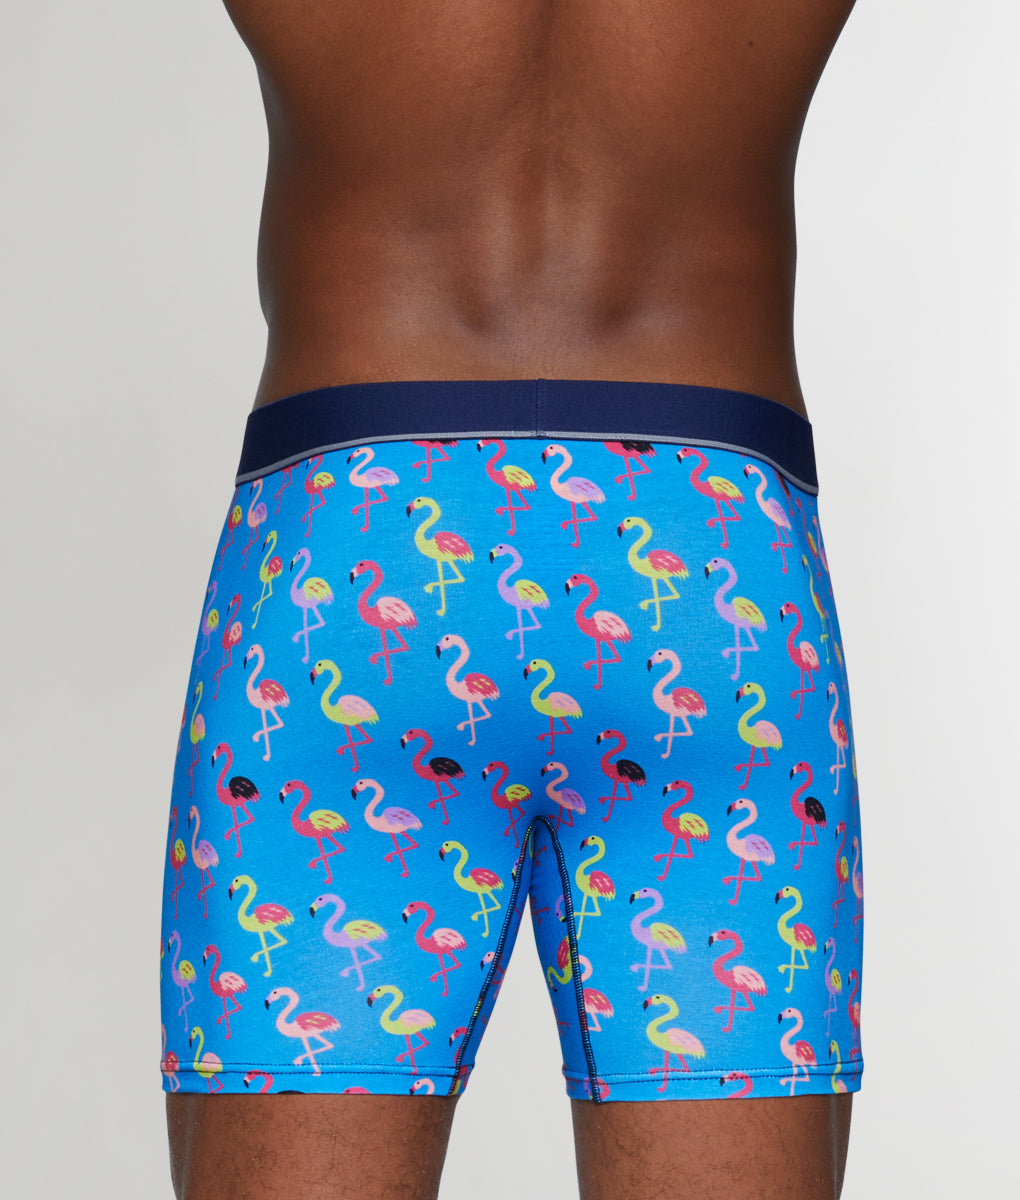 Penetratie Openbaren fossiel Unsimply Stitched Flamingo Boxer Brief - Underwear Expert